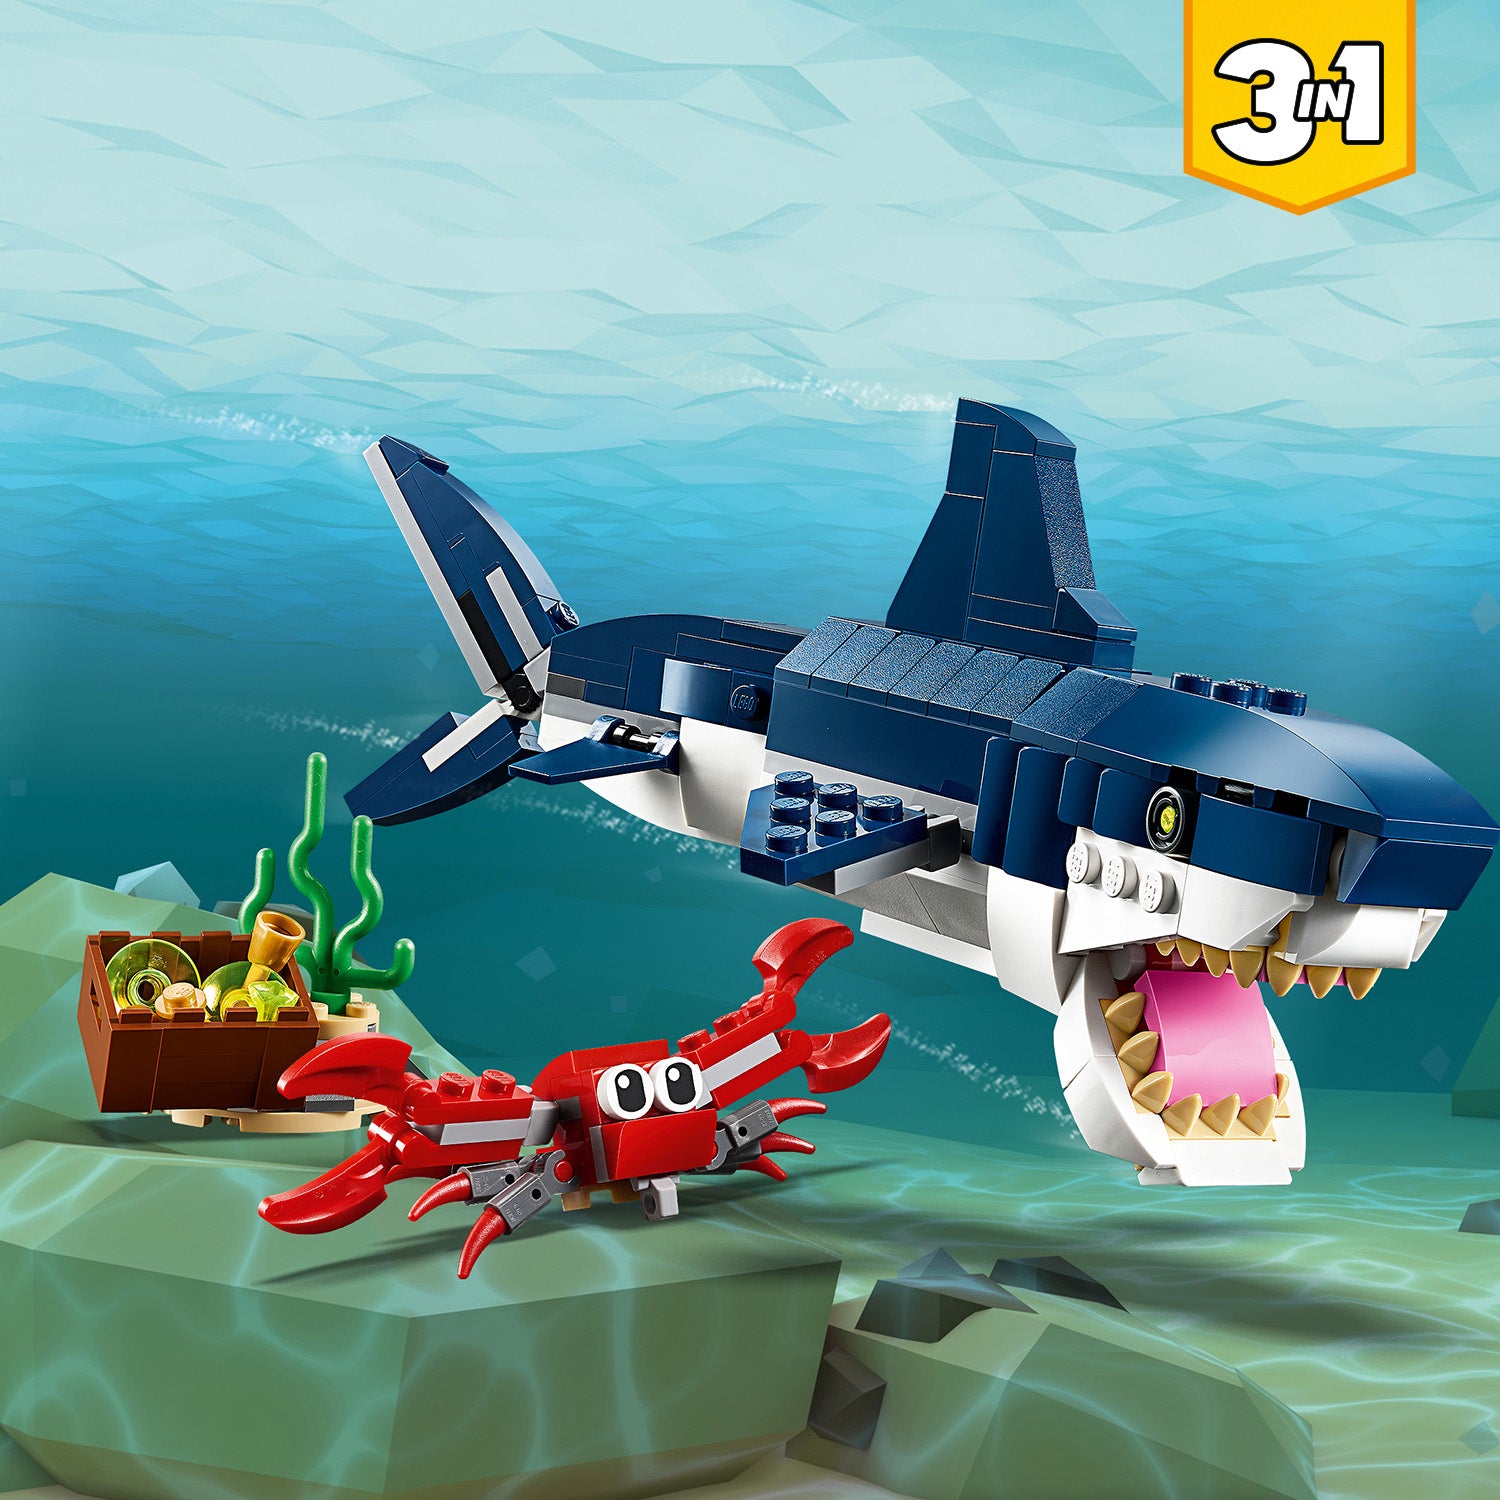 LEGO Creator Deep Sea Creatures 31088